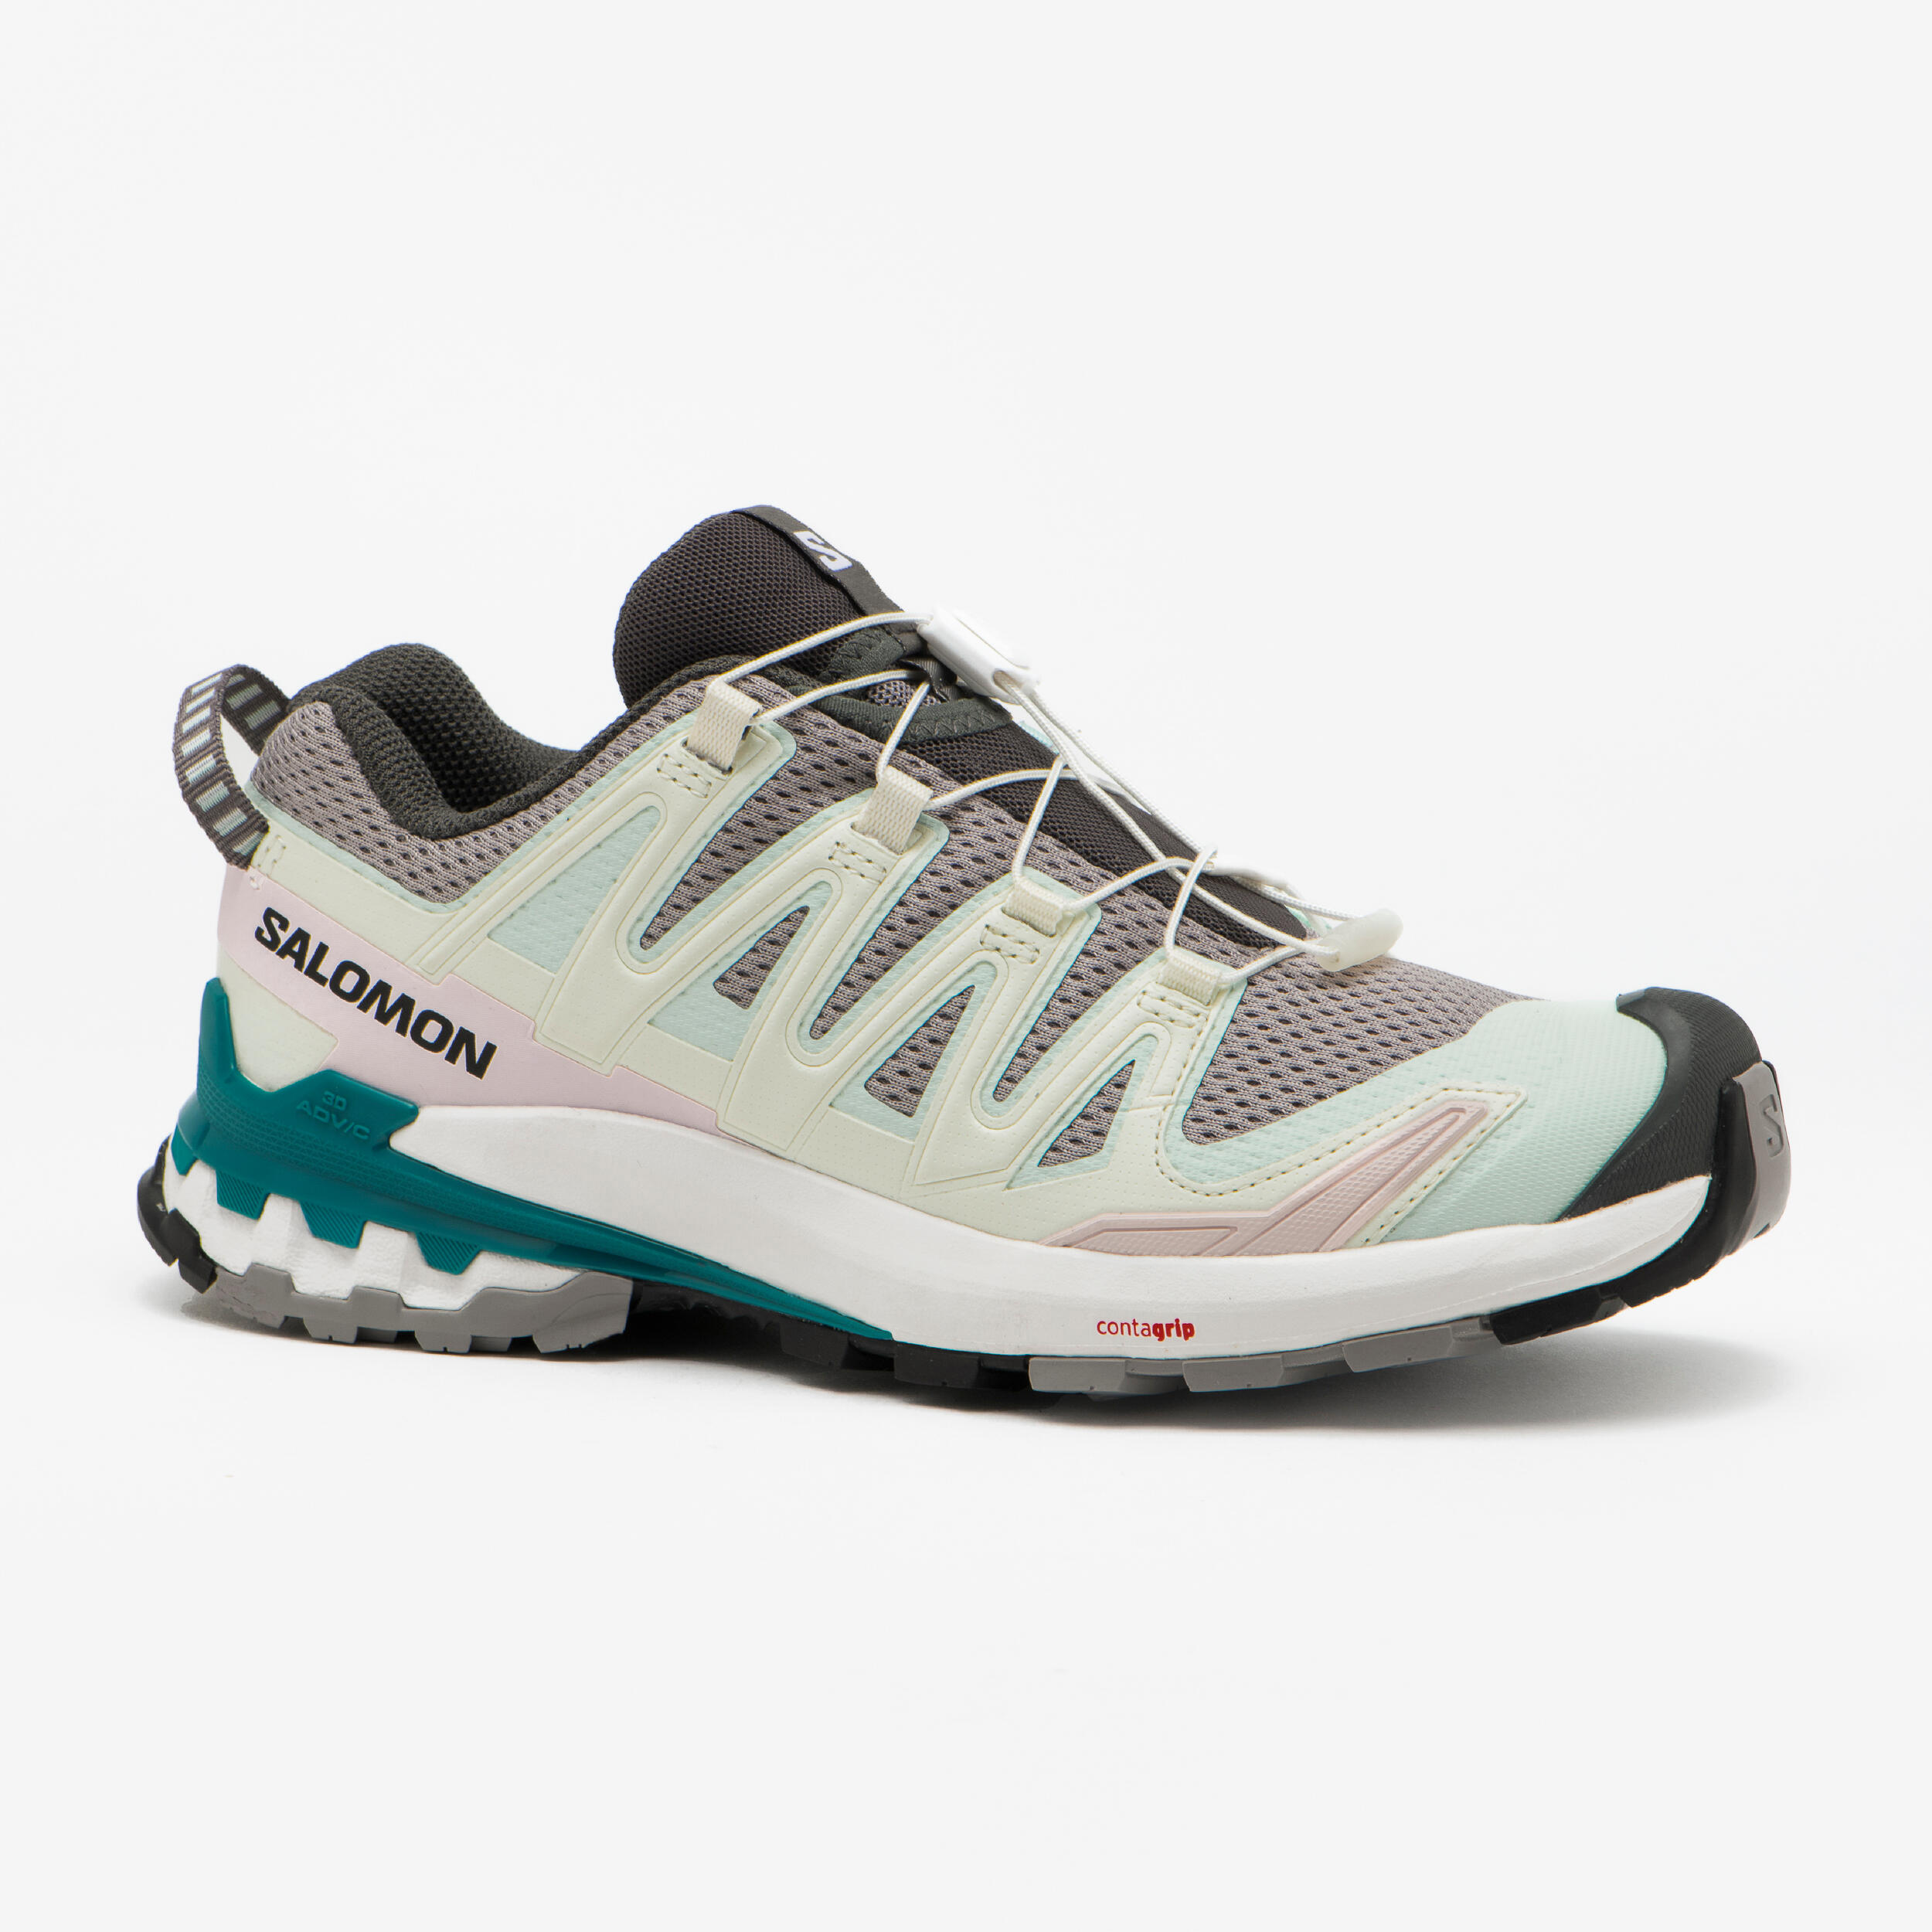 Salomon Women’s Mountain Hiking Boots - Xa Pro 3d V9